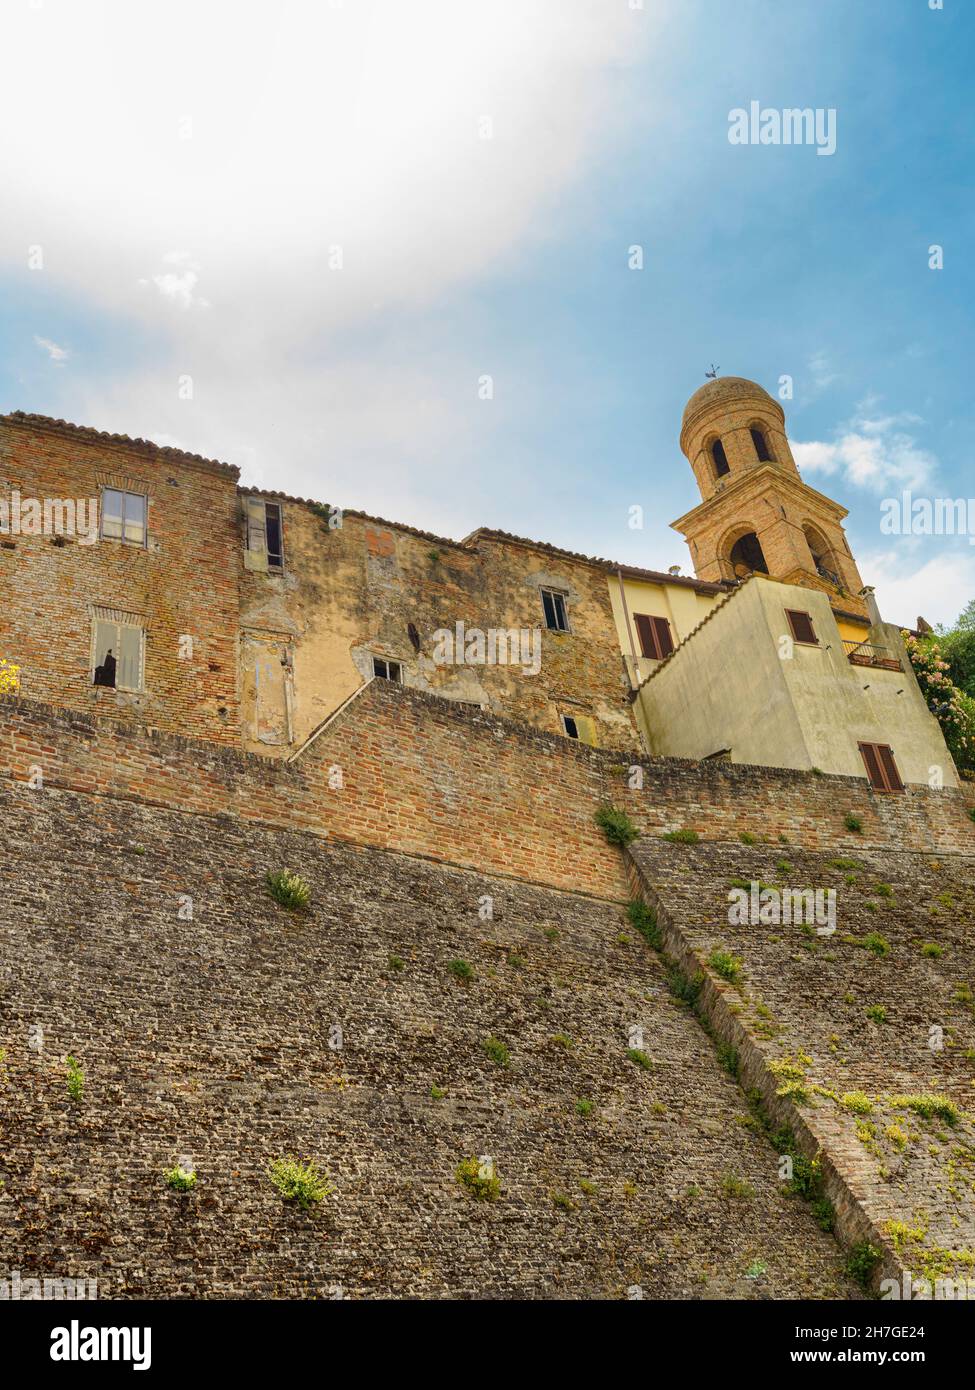 Mondavio, Pesaro e Urbino province, Marche, Italy: medieval city surrounded by walls Stock Photo